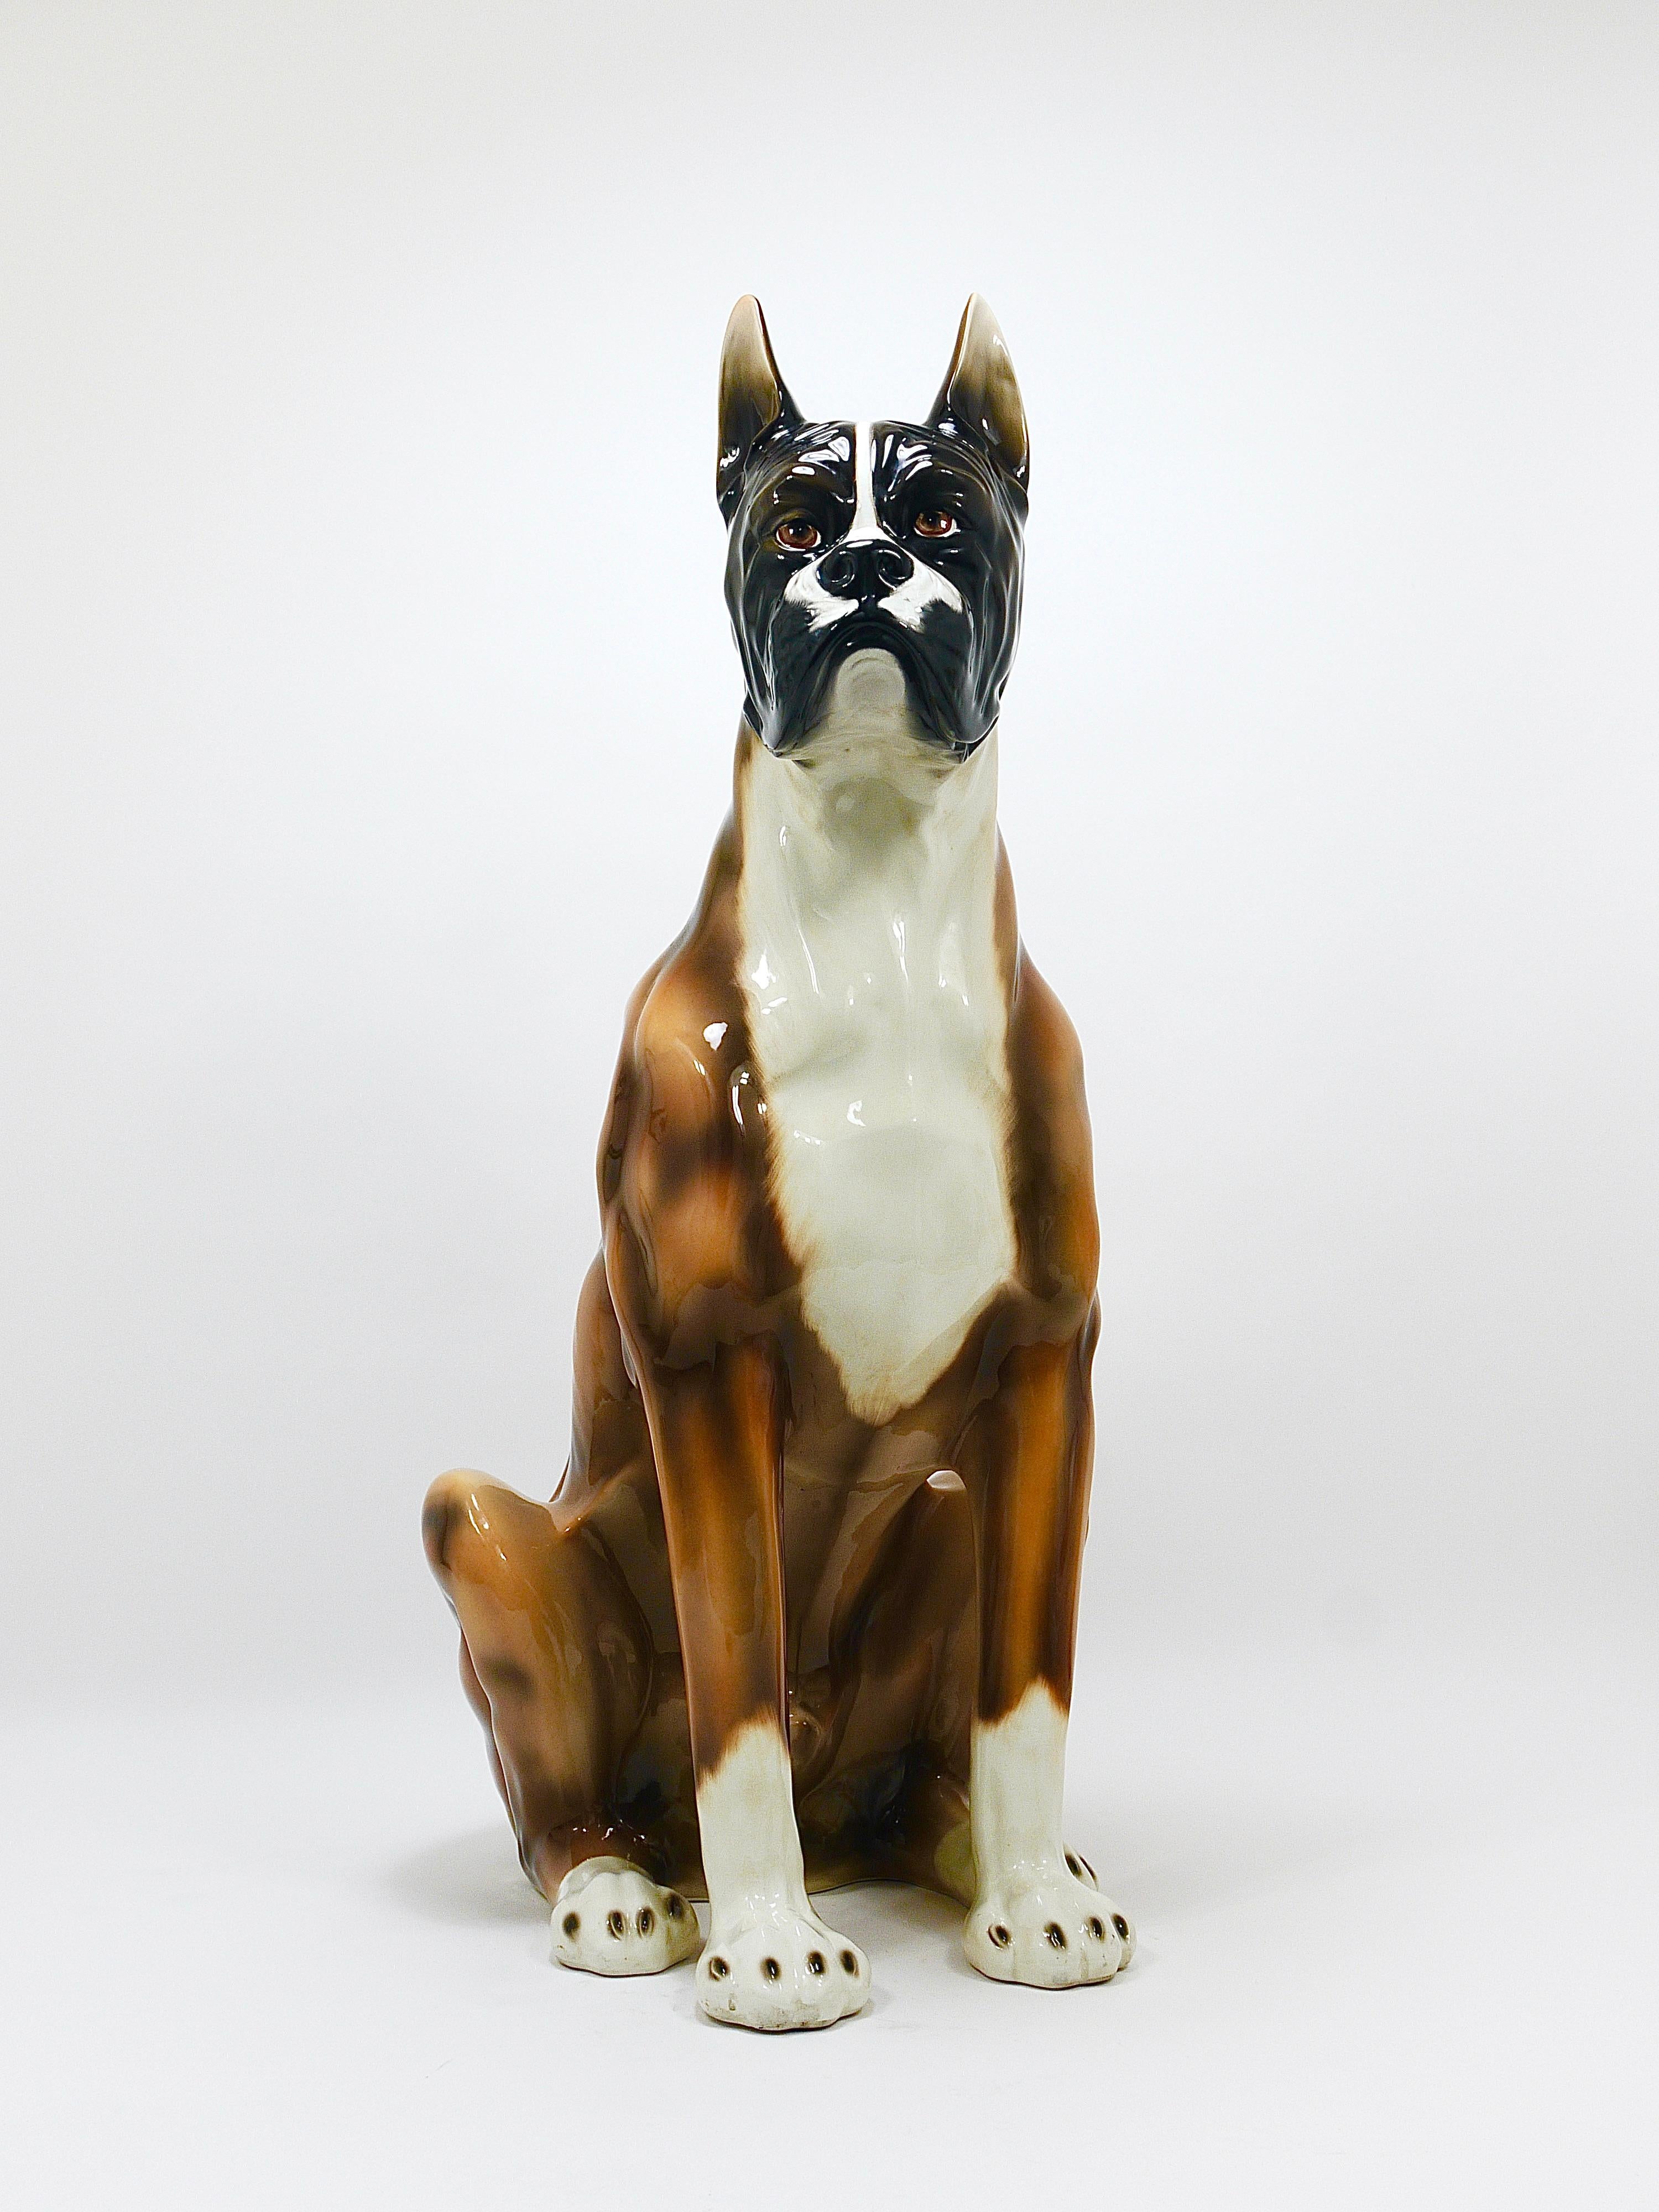 Boxer Dog Life-Size Majolica Statue Sculpture, Glazed Ceramic, Italy, 1970s For Sale 8